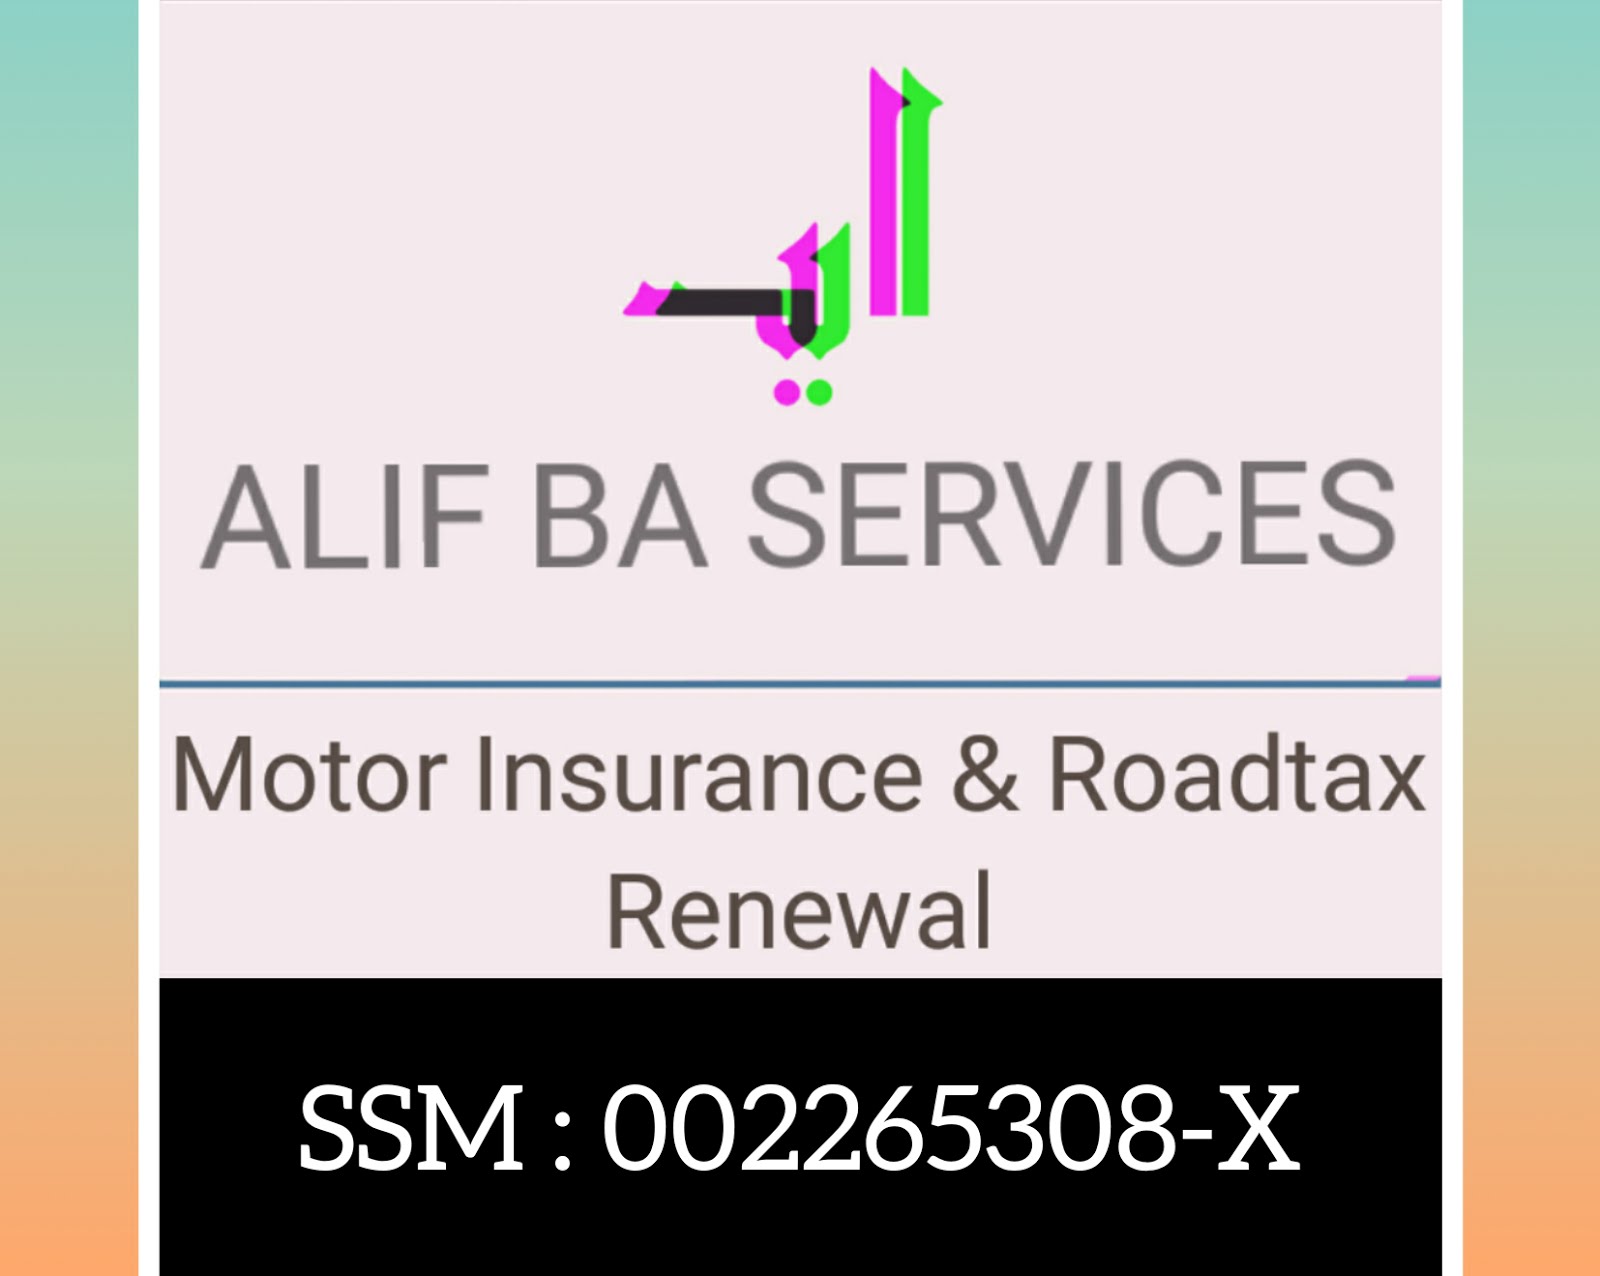  ALIF BA SERVICES - MALAYSIA ROAD TAX AND INSURANCE RENEWAL